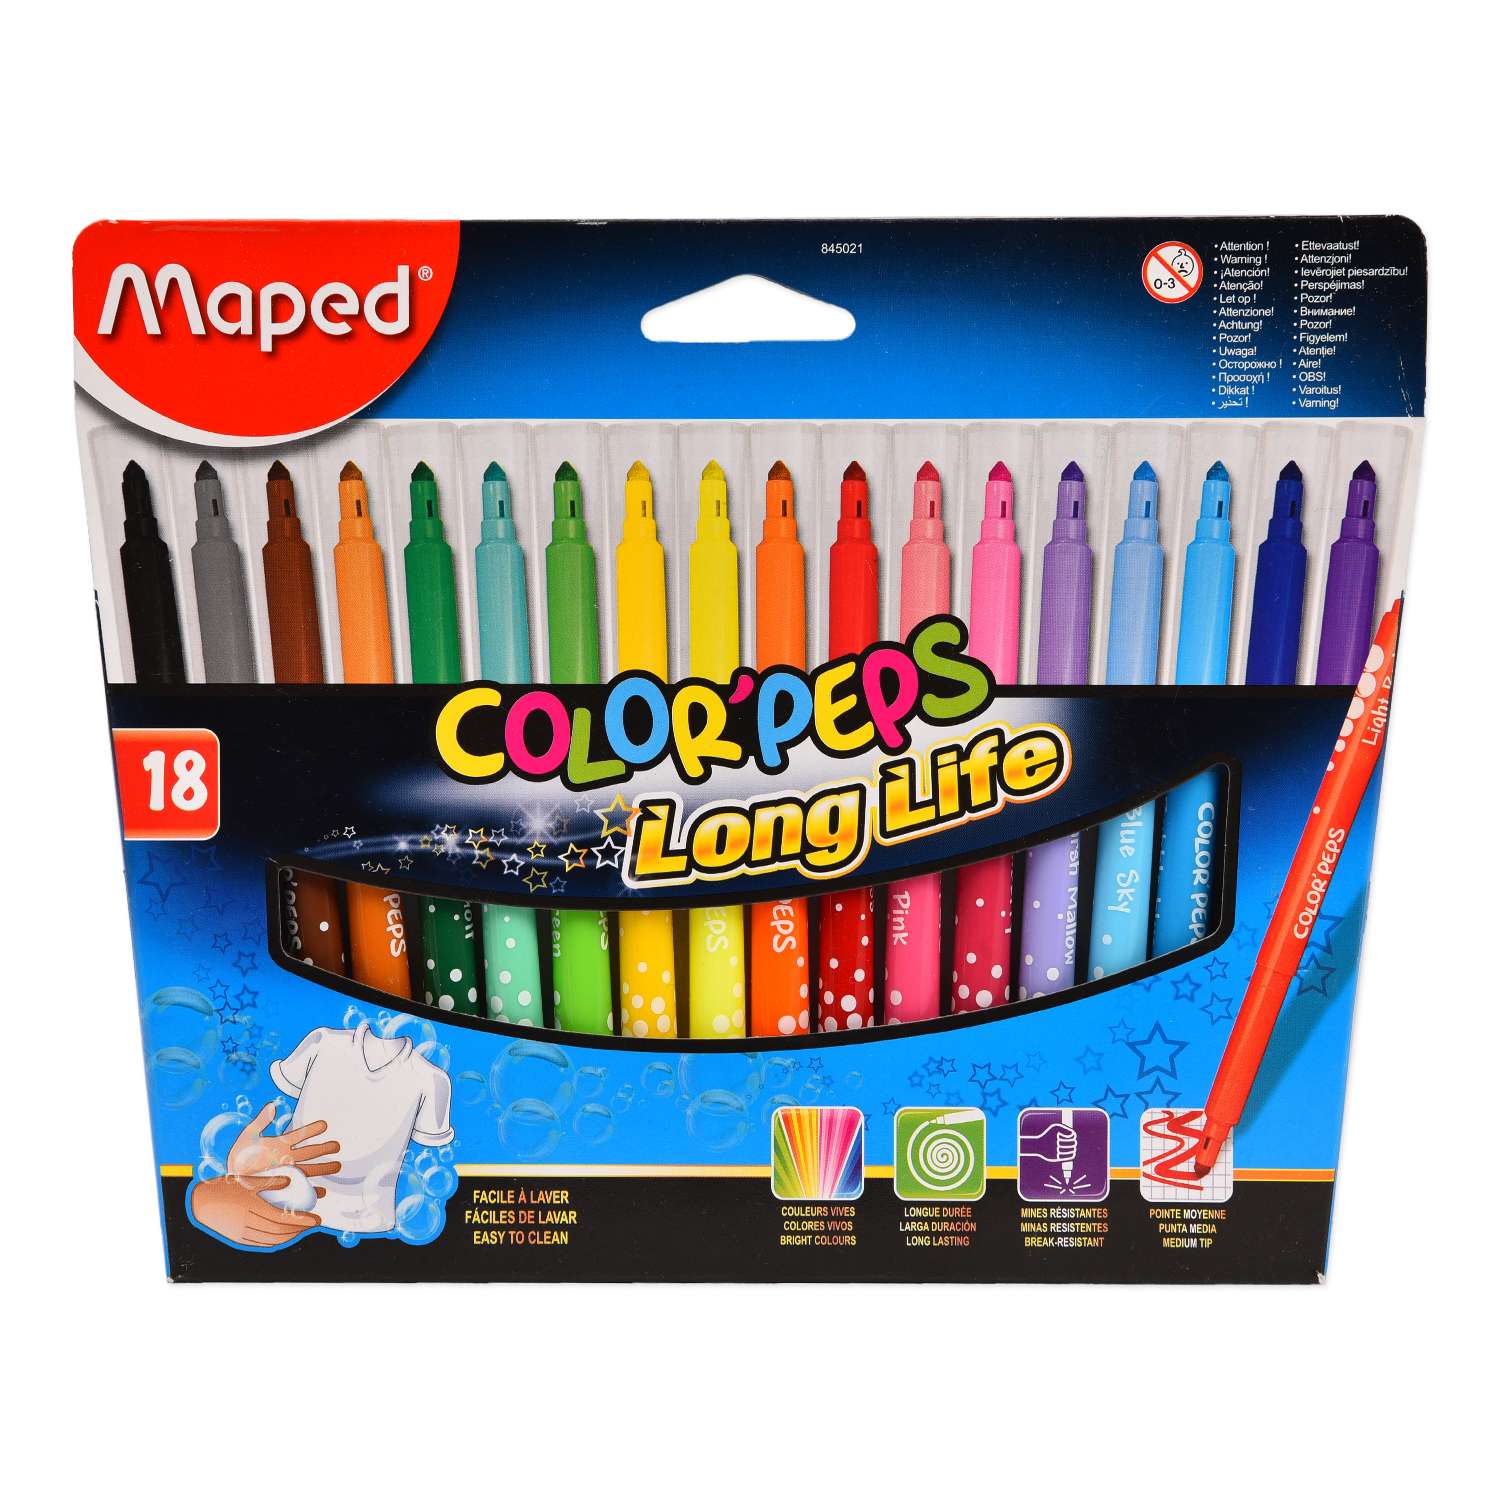 Фломастеры MAPED Color Peps 18цветов 845021 - фото 1